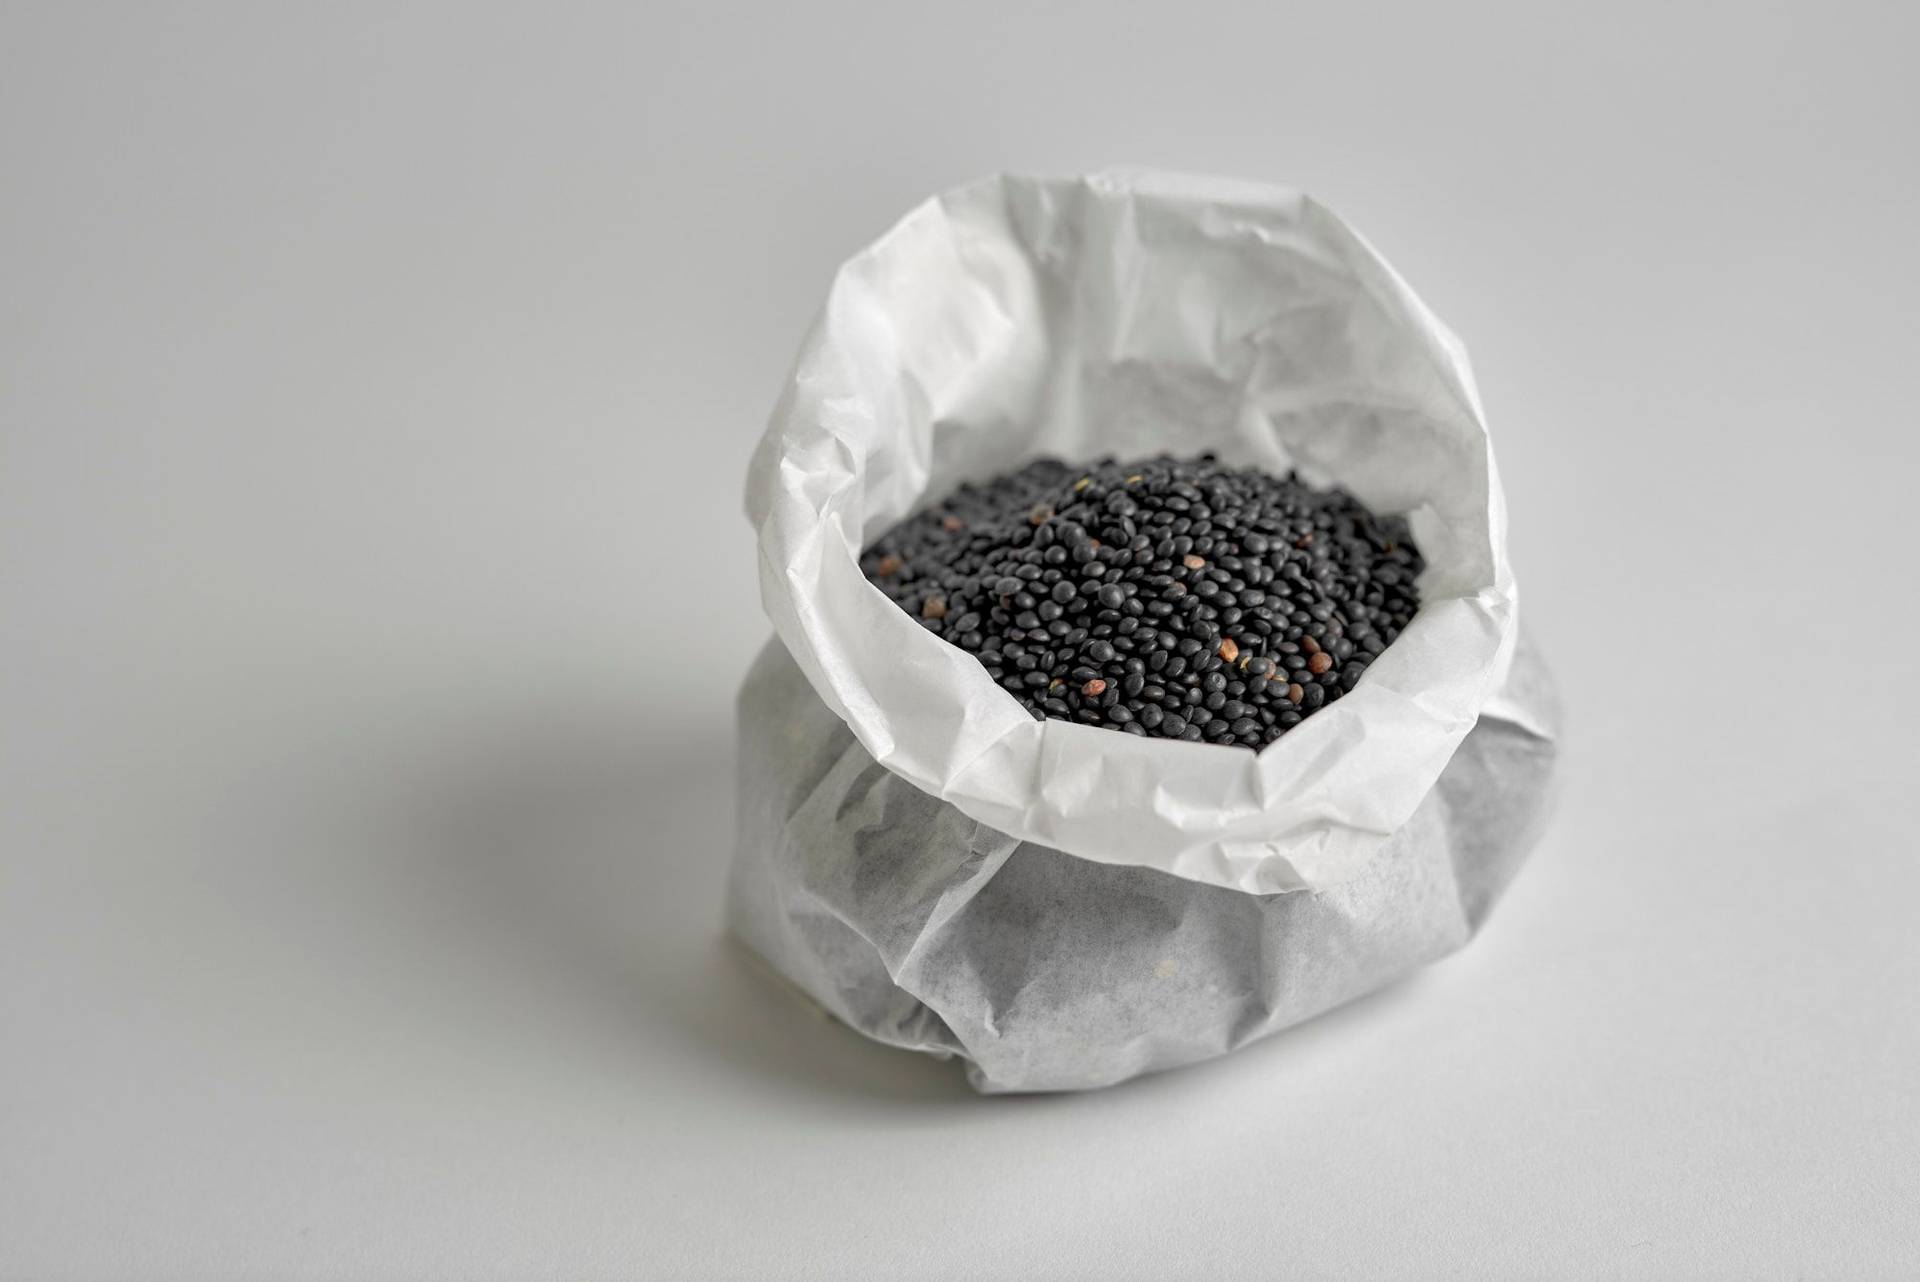 black beluga lentils in a paper bag on white background